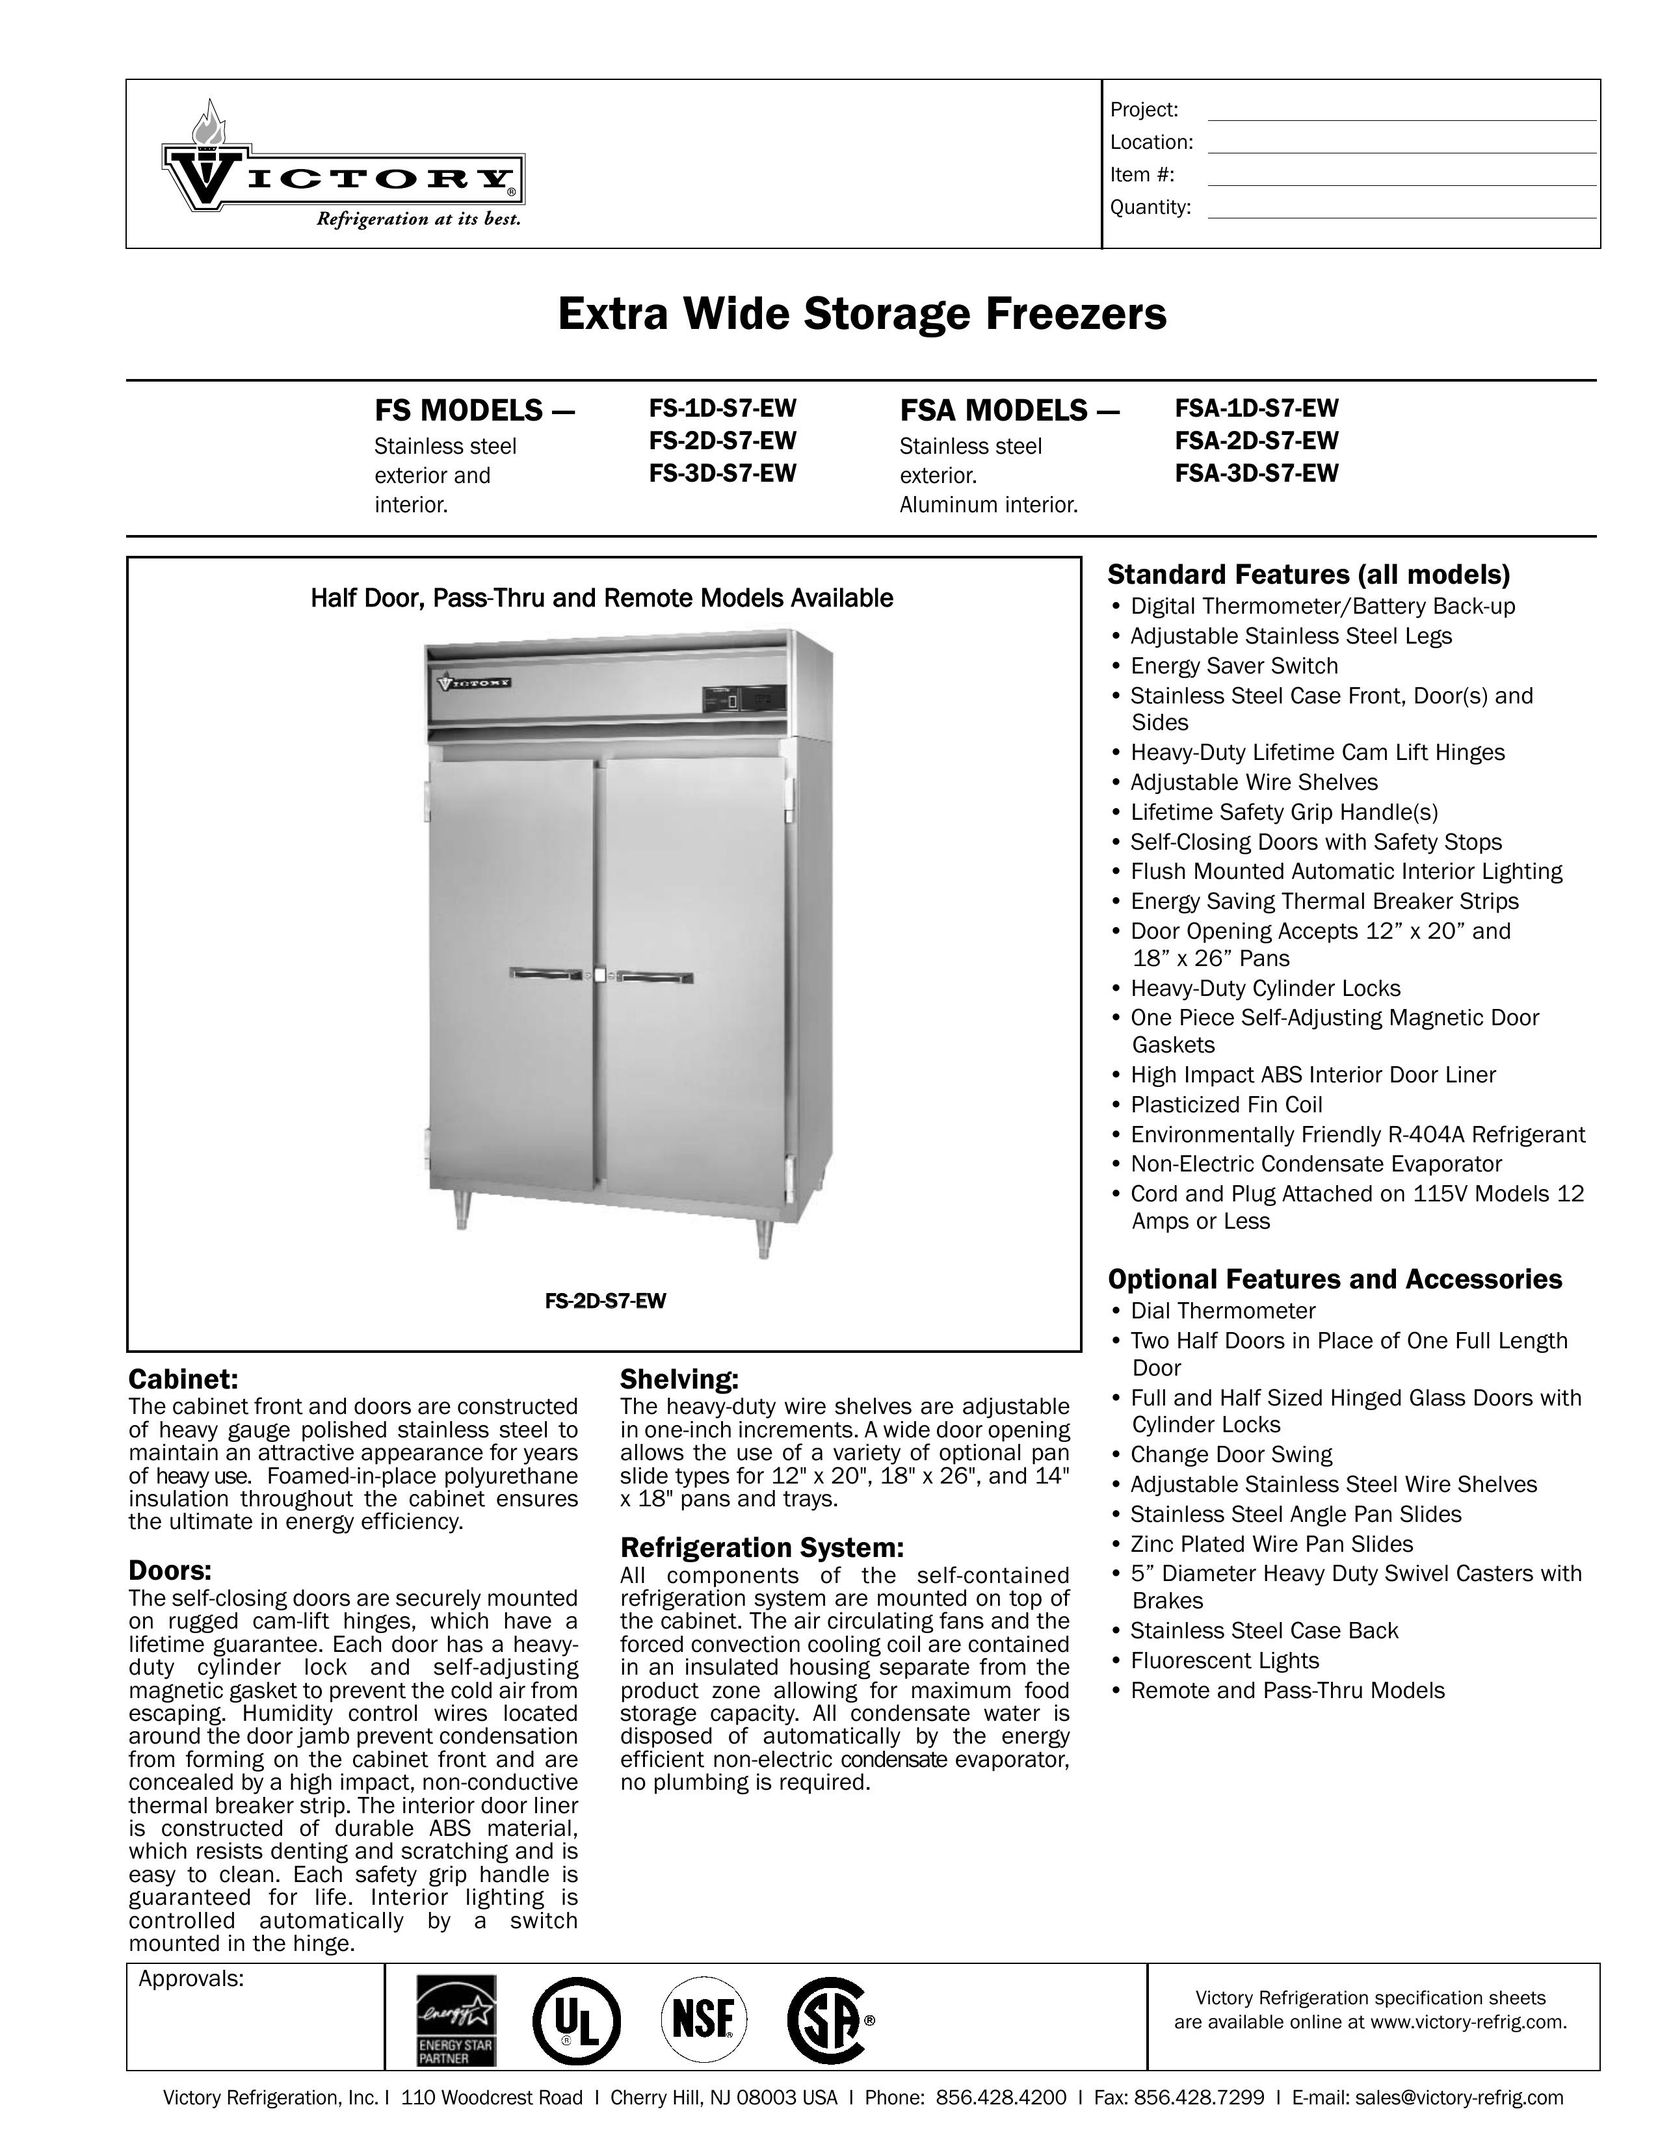 Victory Refrigeration FS-2D-S7-EW Freezer User Manual